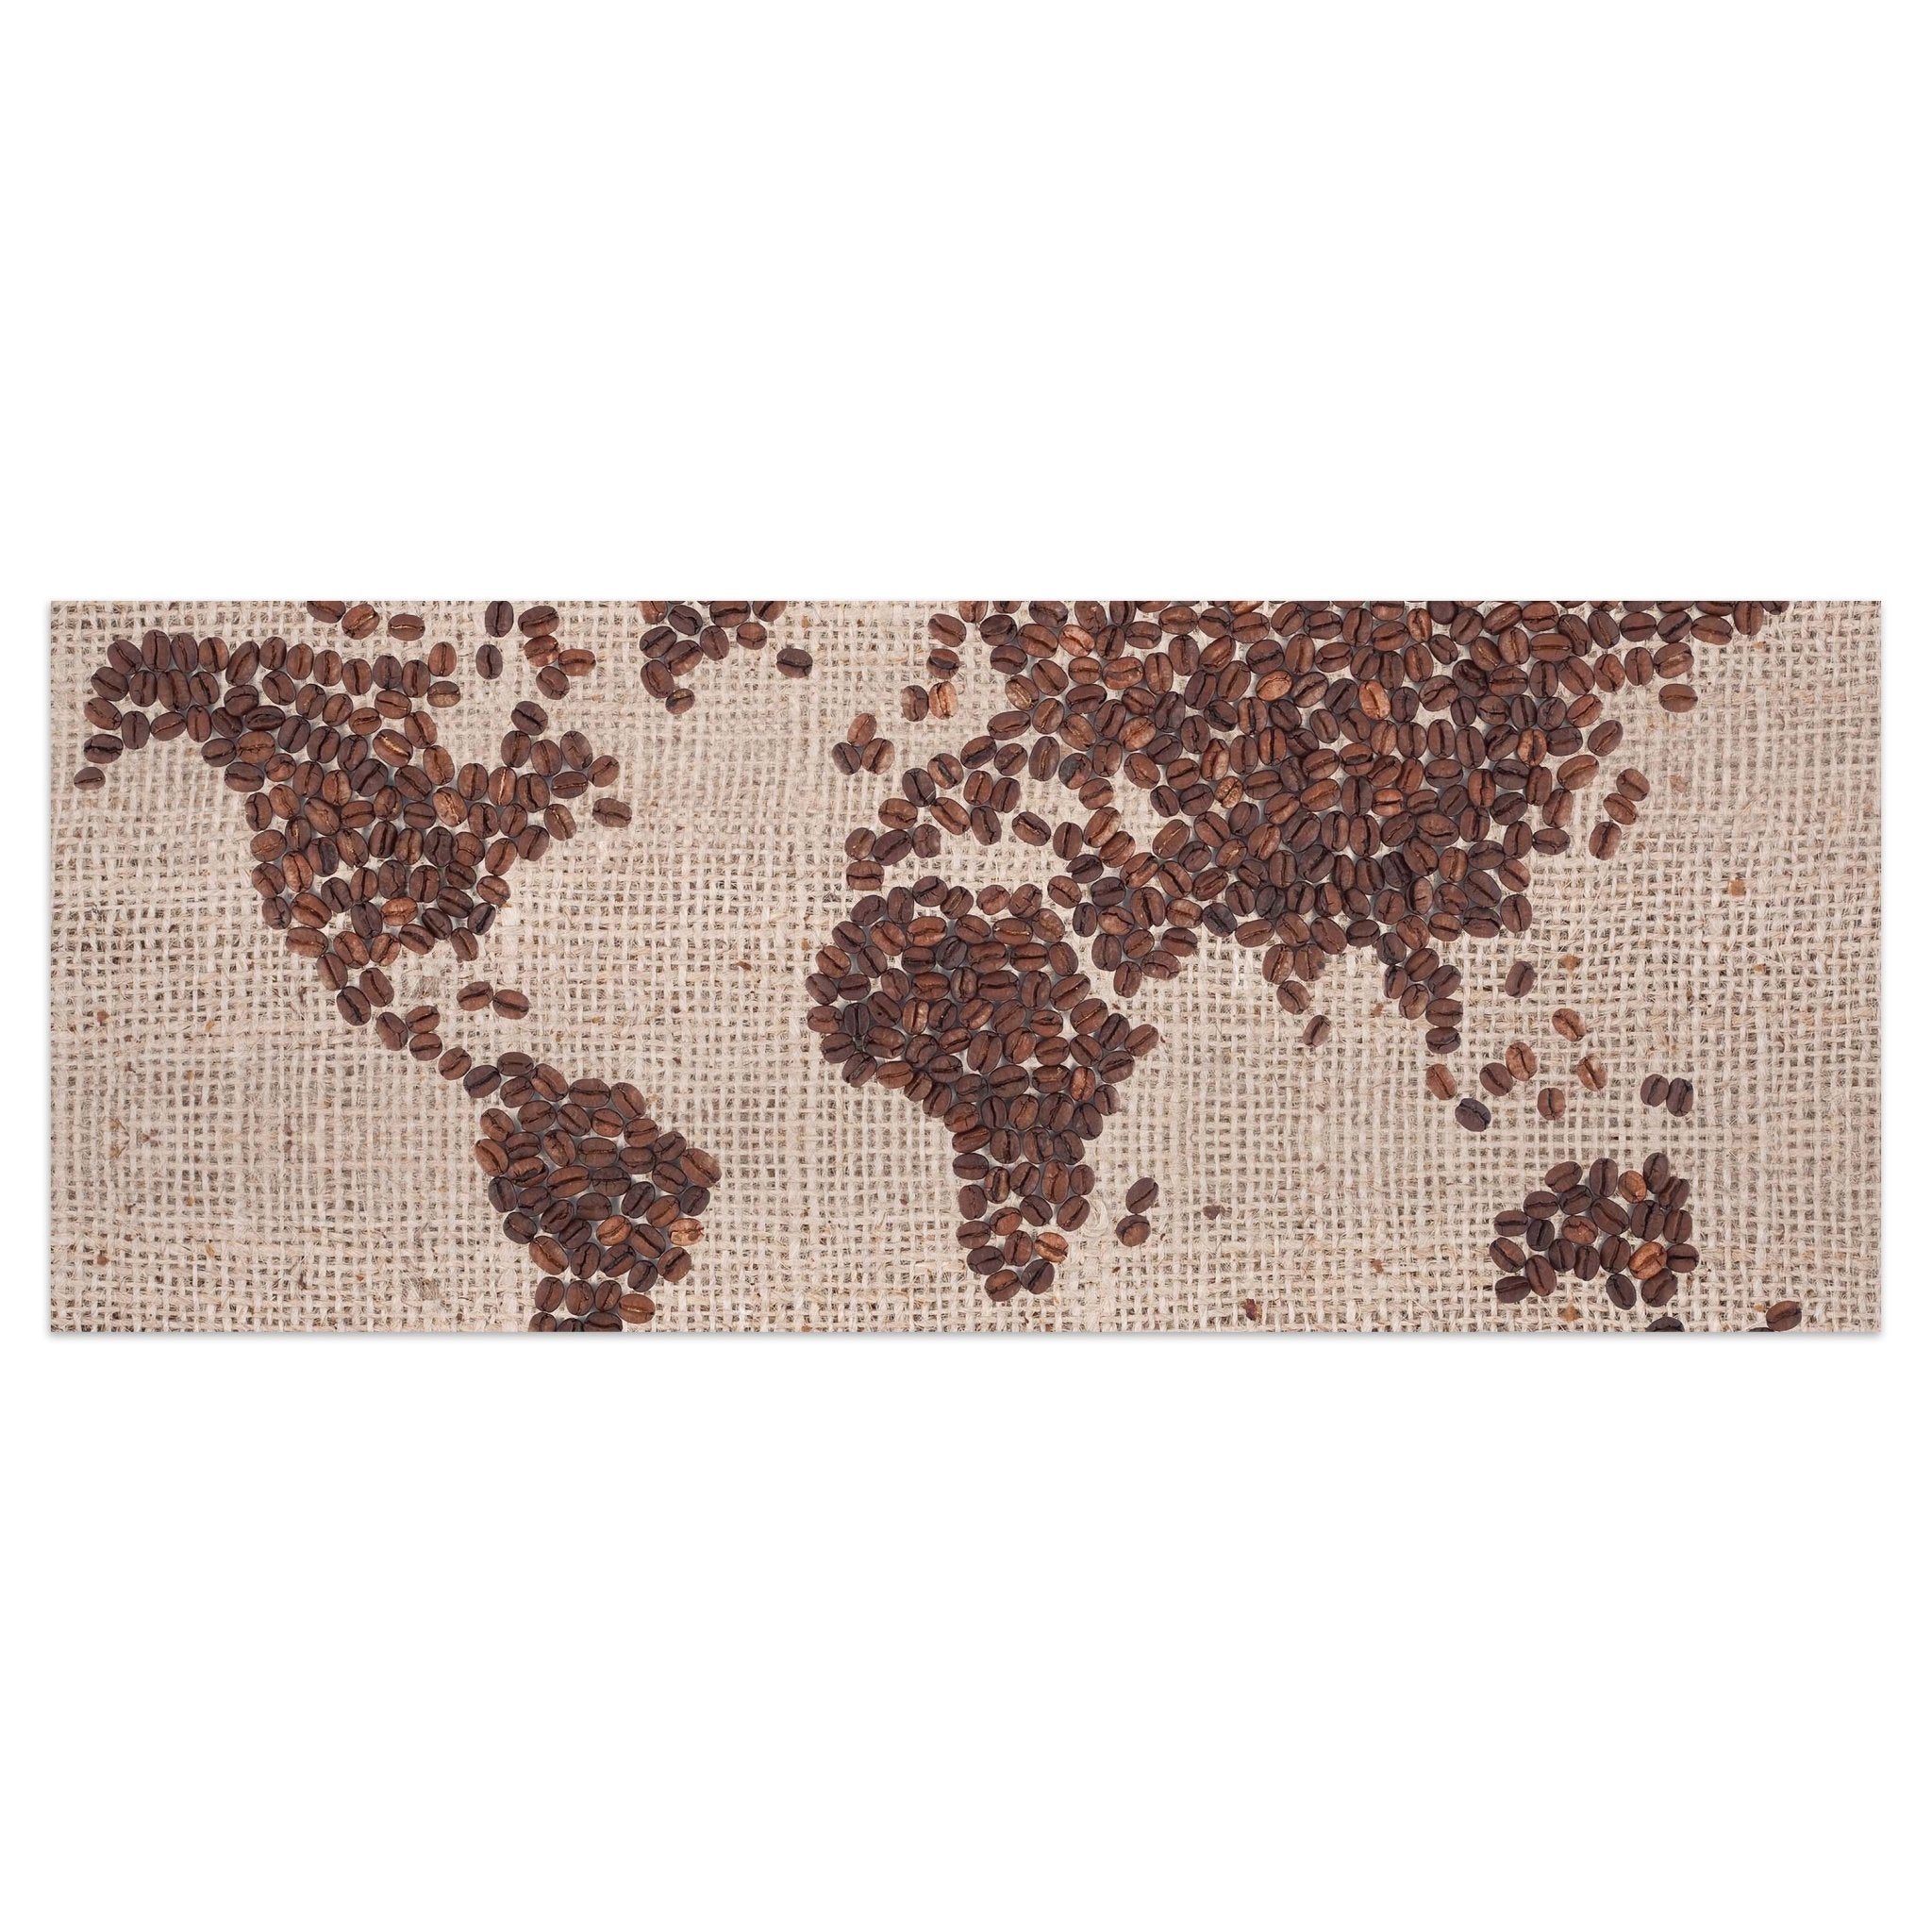 Leinwandbild Weltkarte Kaffee M0012 kaufen - Bild 1